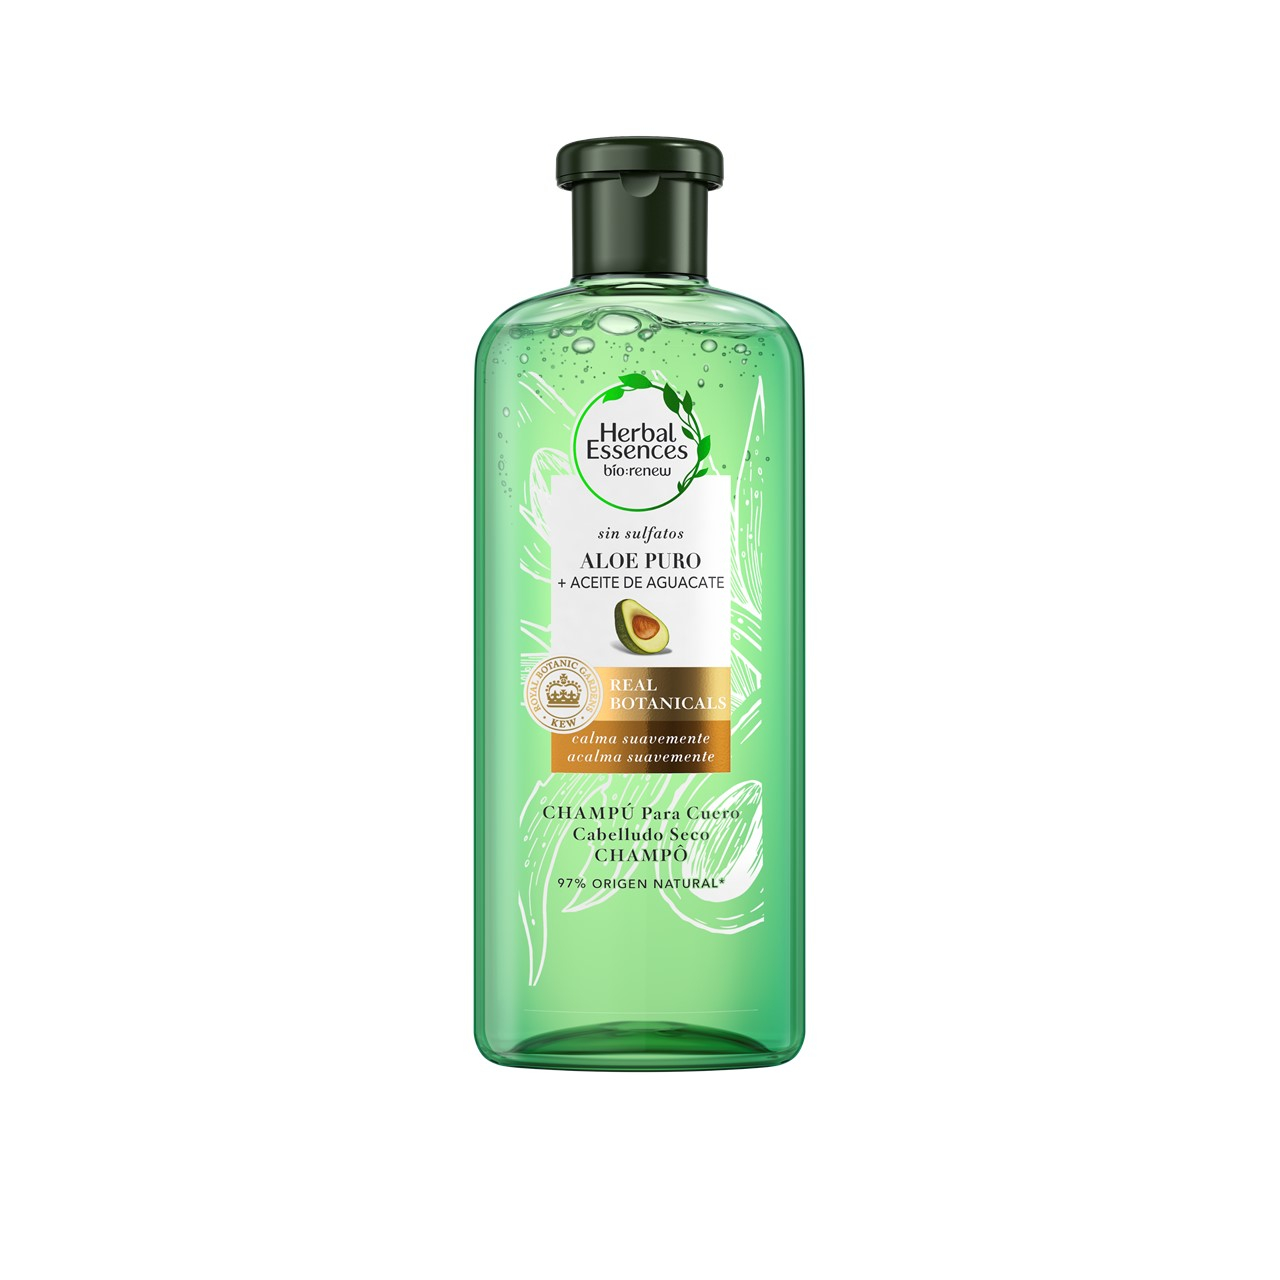 https://static.beautytocare.com/media/catalog/product/h/e/herbal-essences-bio-renew-pure-aloe-avocado-oil-sulfate-free-shampoo-380ml.jpg